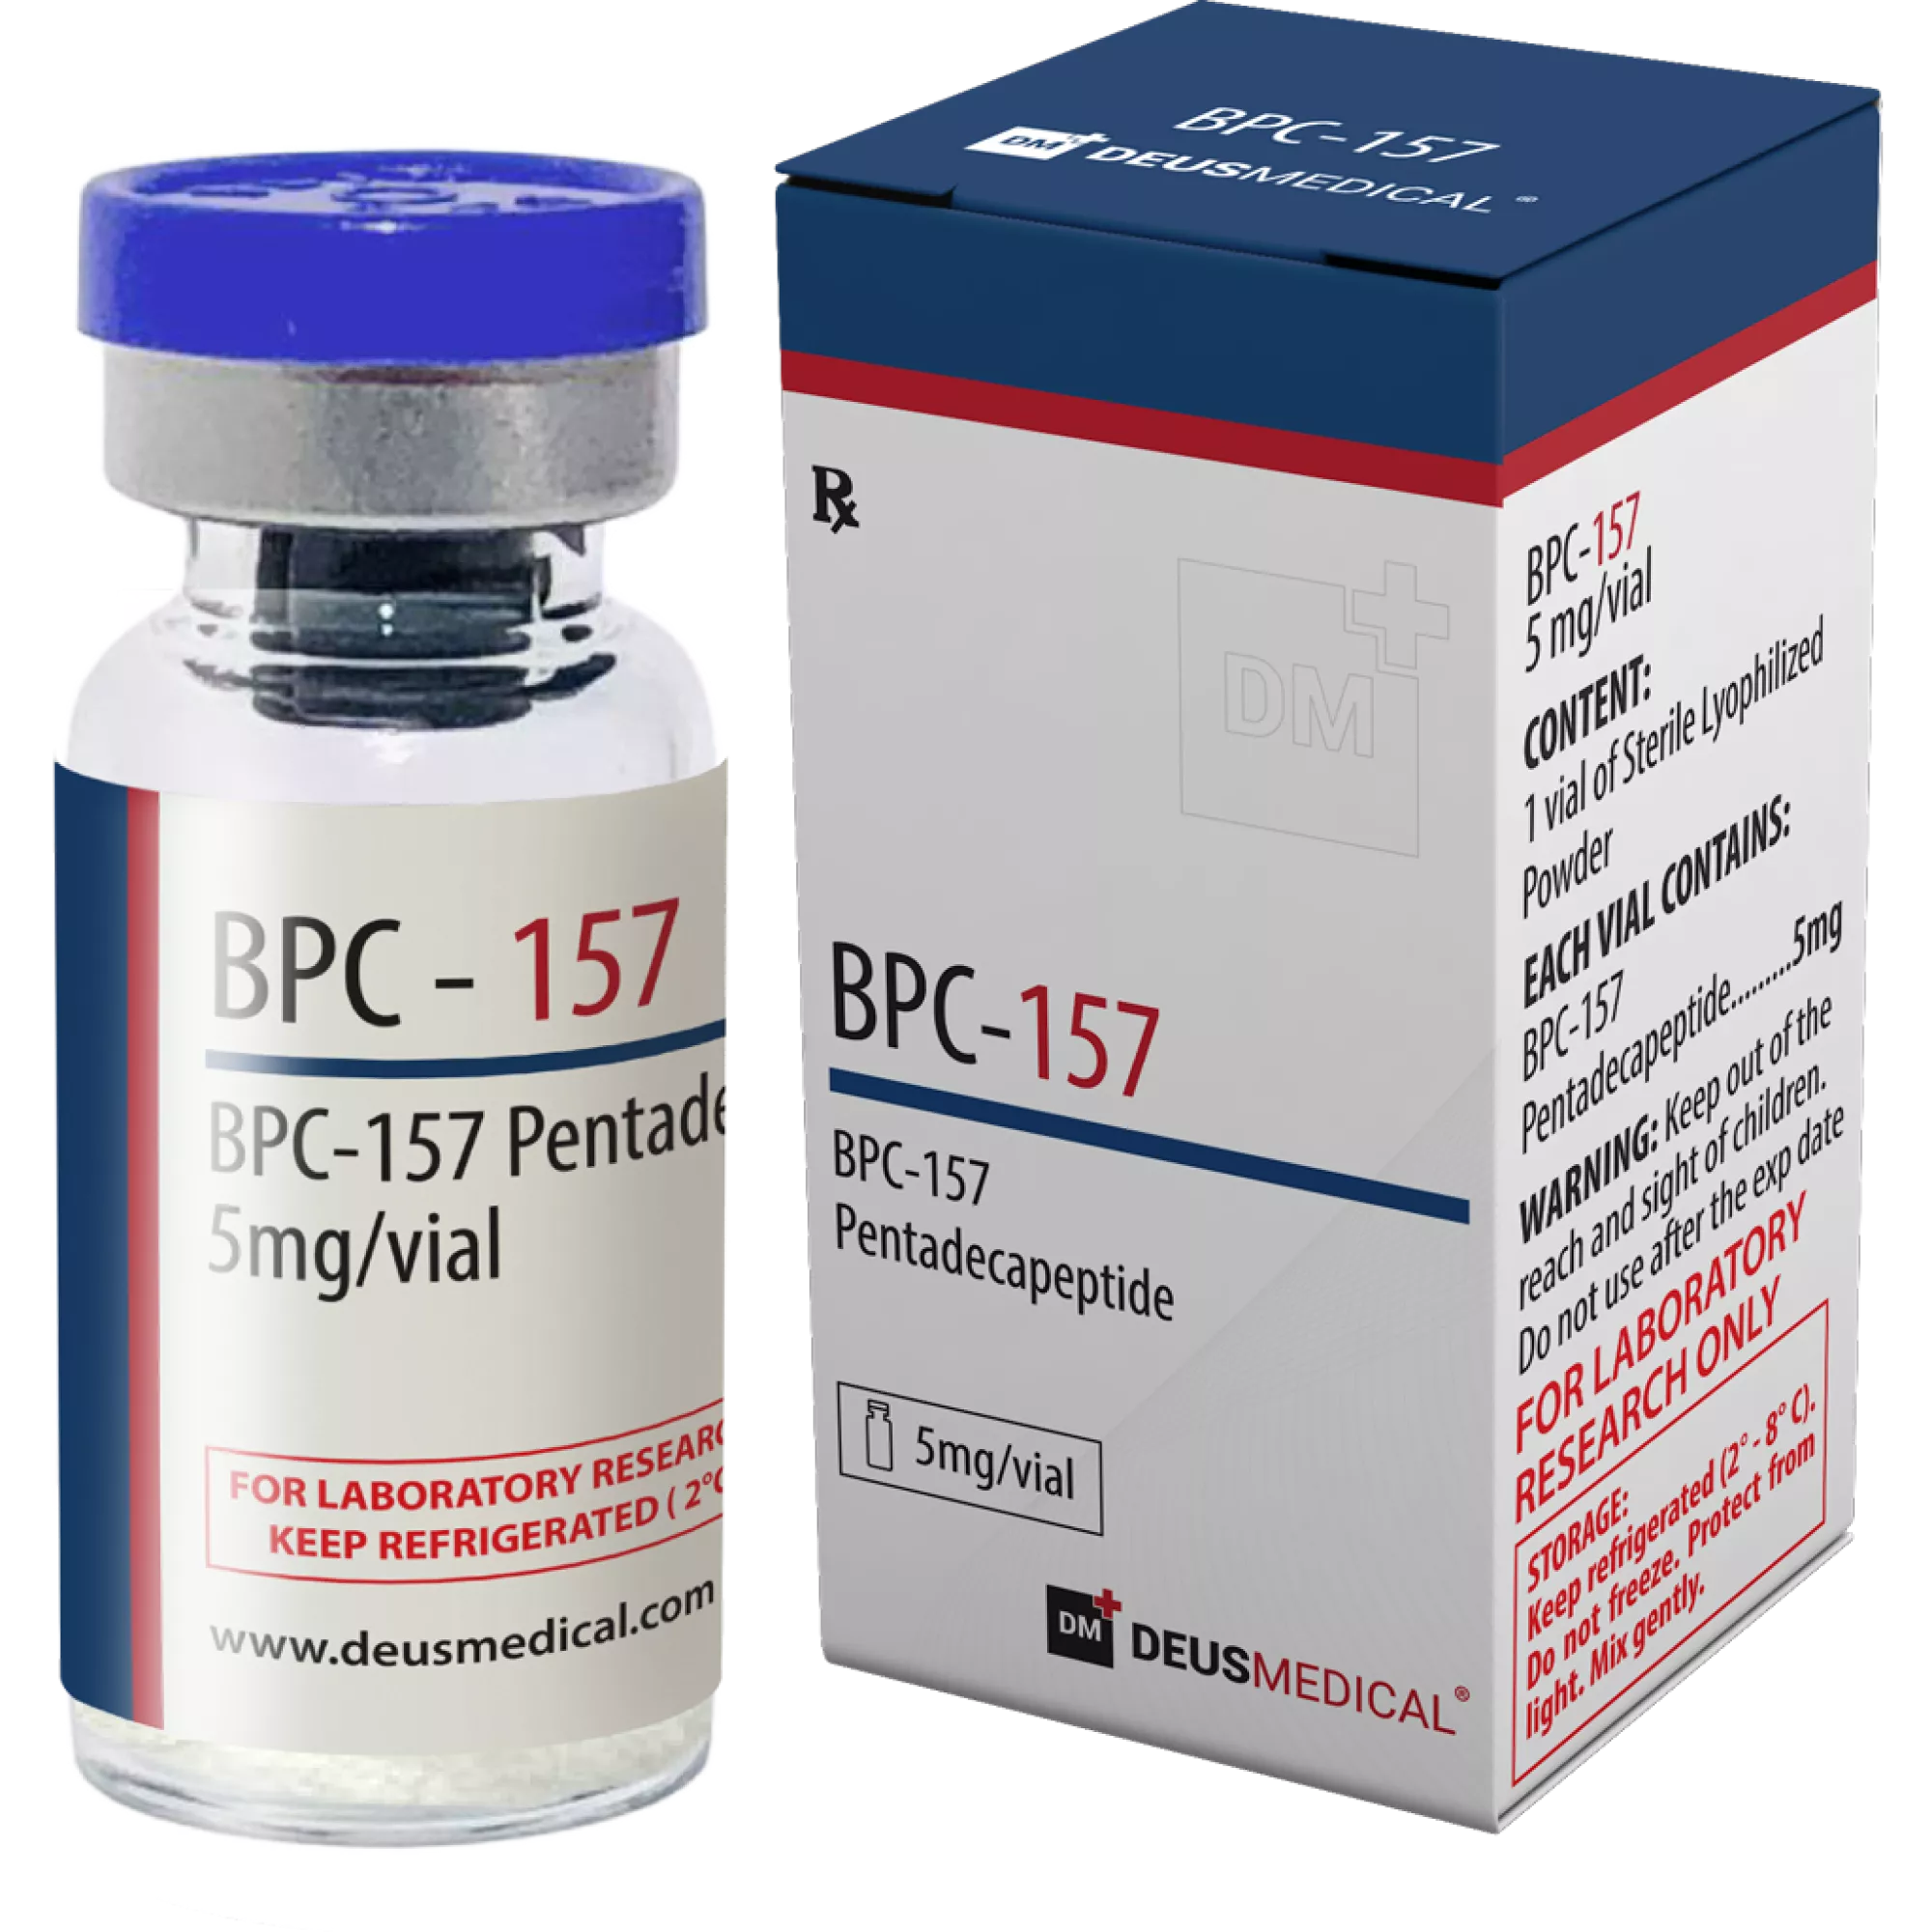 BPC-157 (BPC-157 Pentadecapeptide), Deus Medical, Buy Steroids Online - www.deuspower.shop